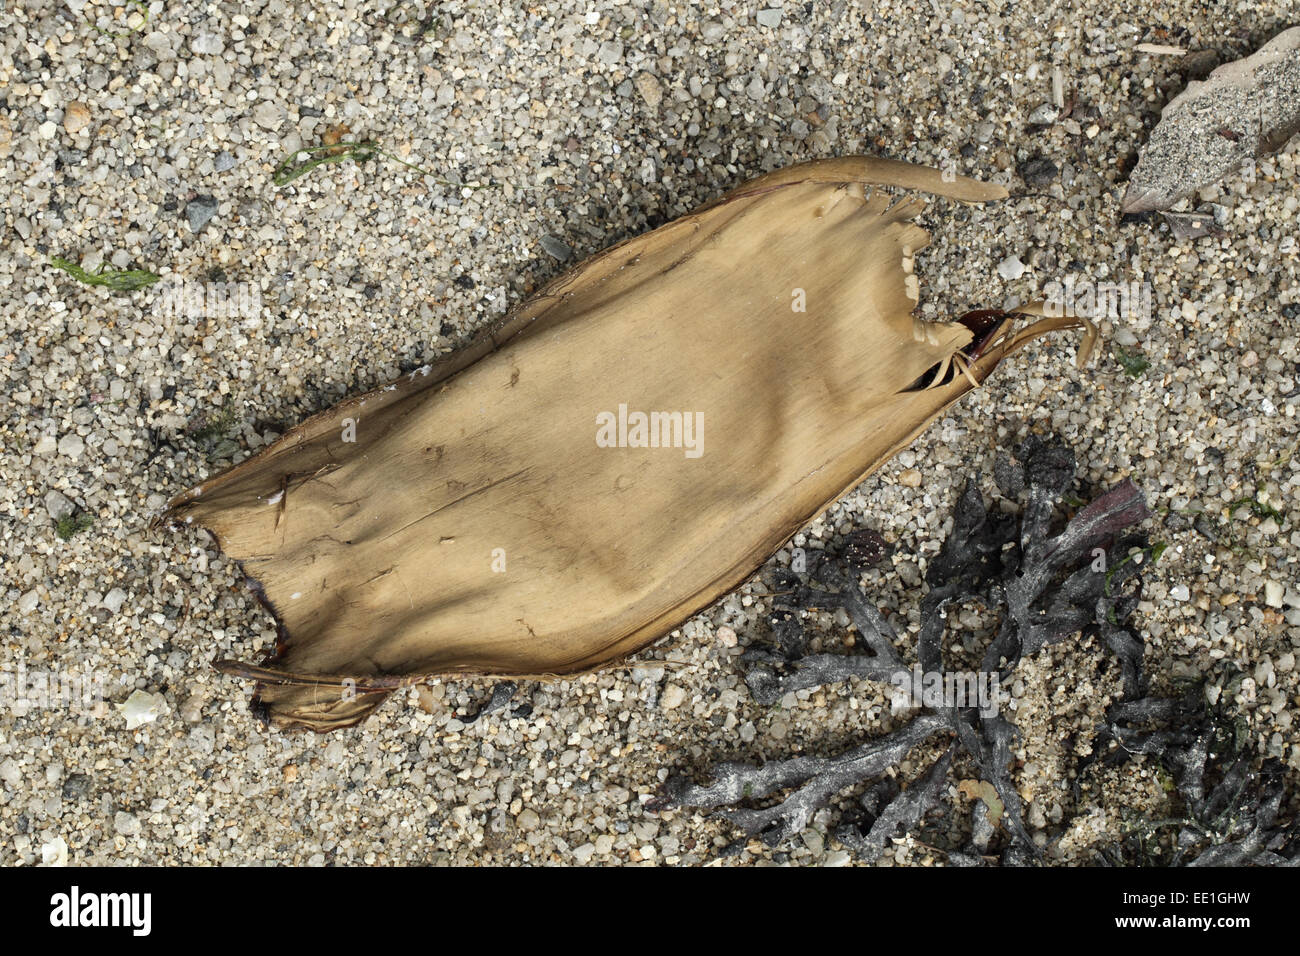 Common Skate (Dipturus batis) 'Mermaid's Purse' eggcase (collection image) Stock Photo